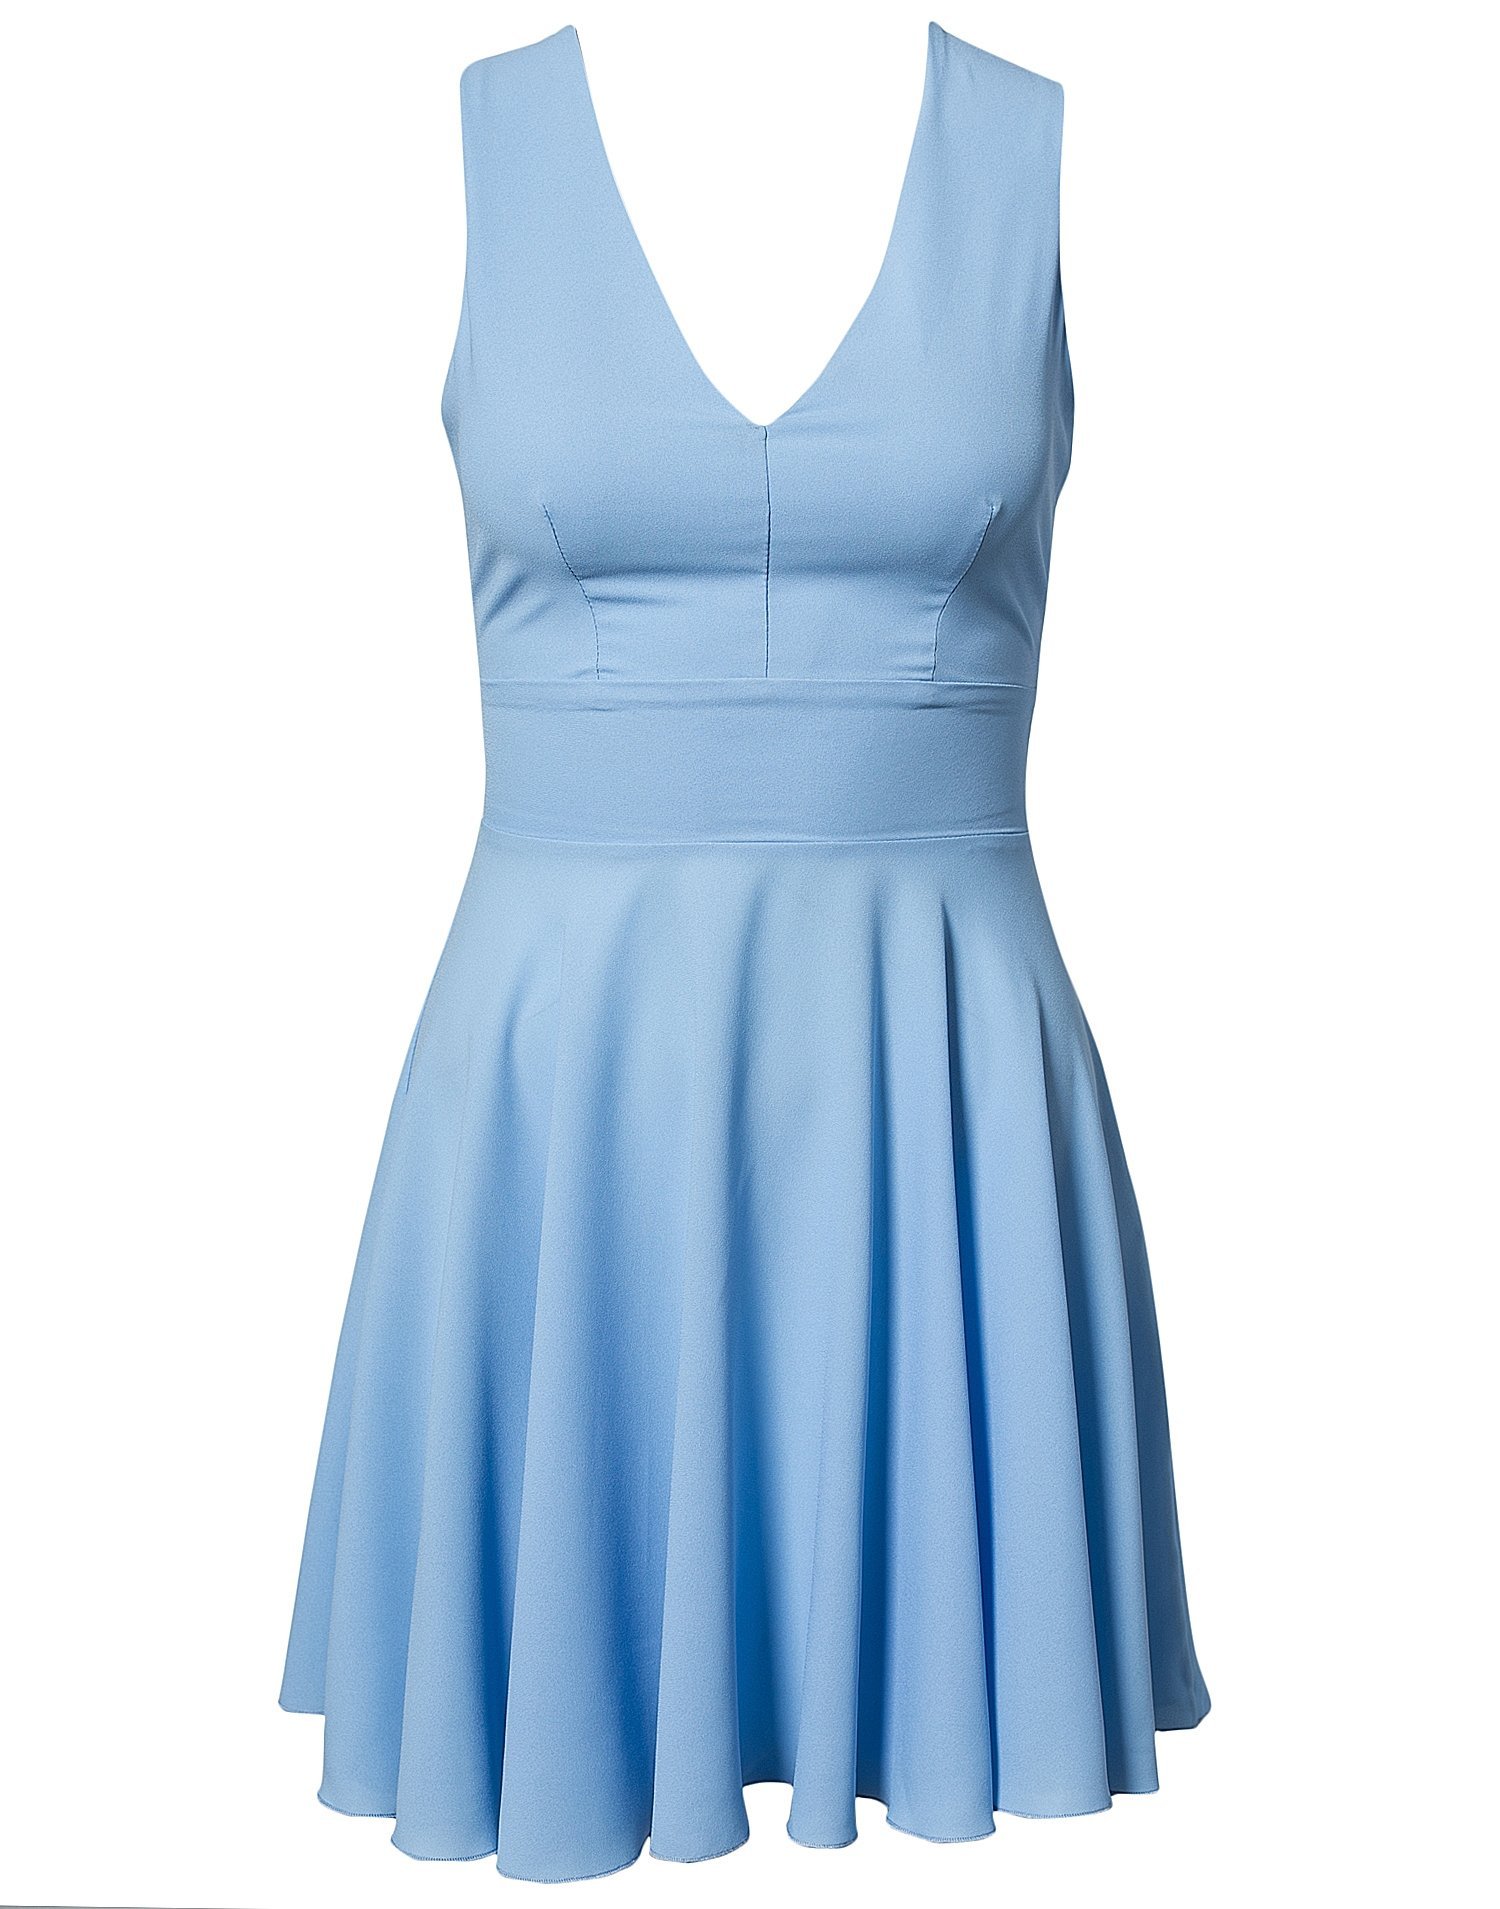 Cross Back Skater Dress - Love - Baby Blue - Party Dresses - Clothing ...